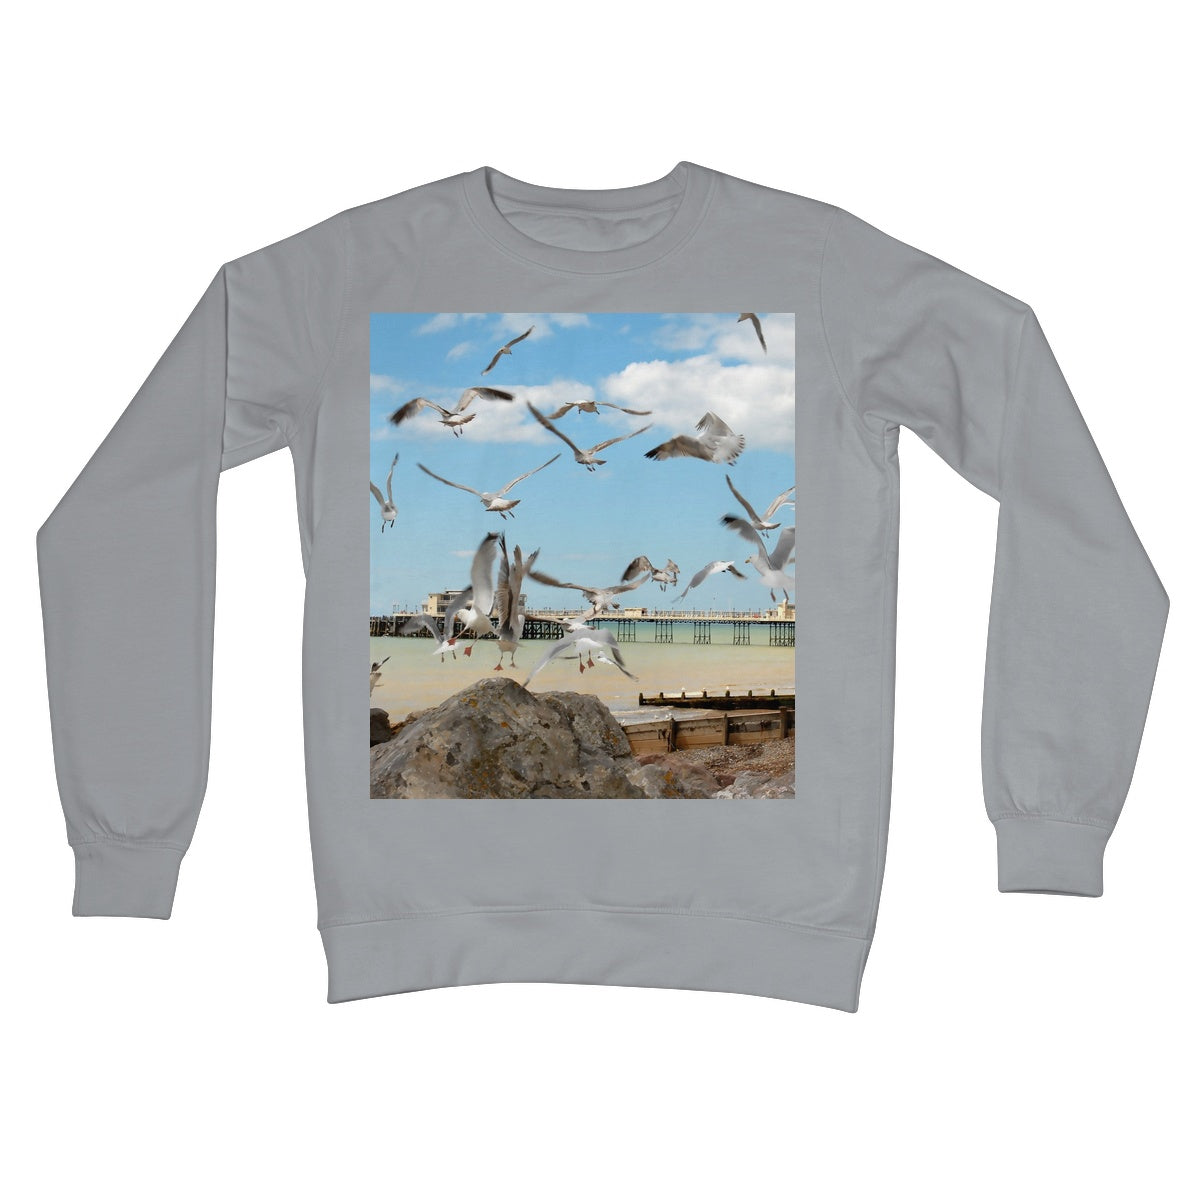 Seagulls At Feeding Time By David Sawyer Crew Neck Sweatshirt